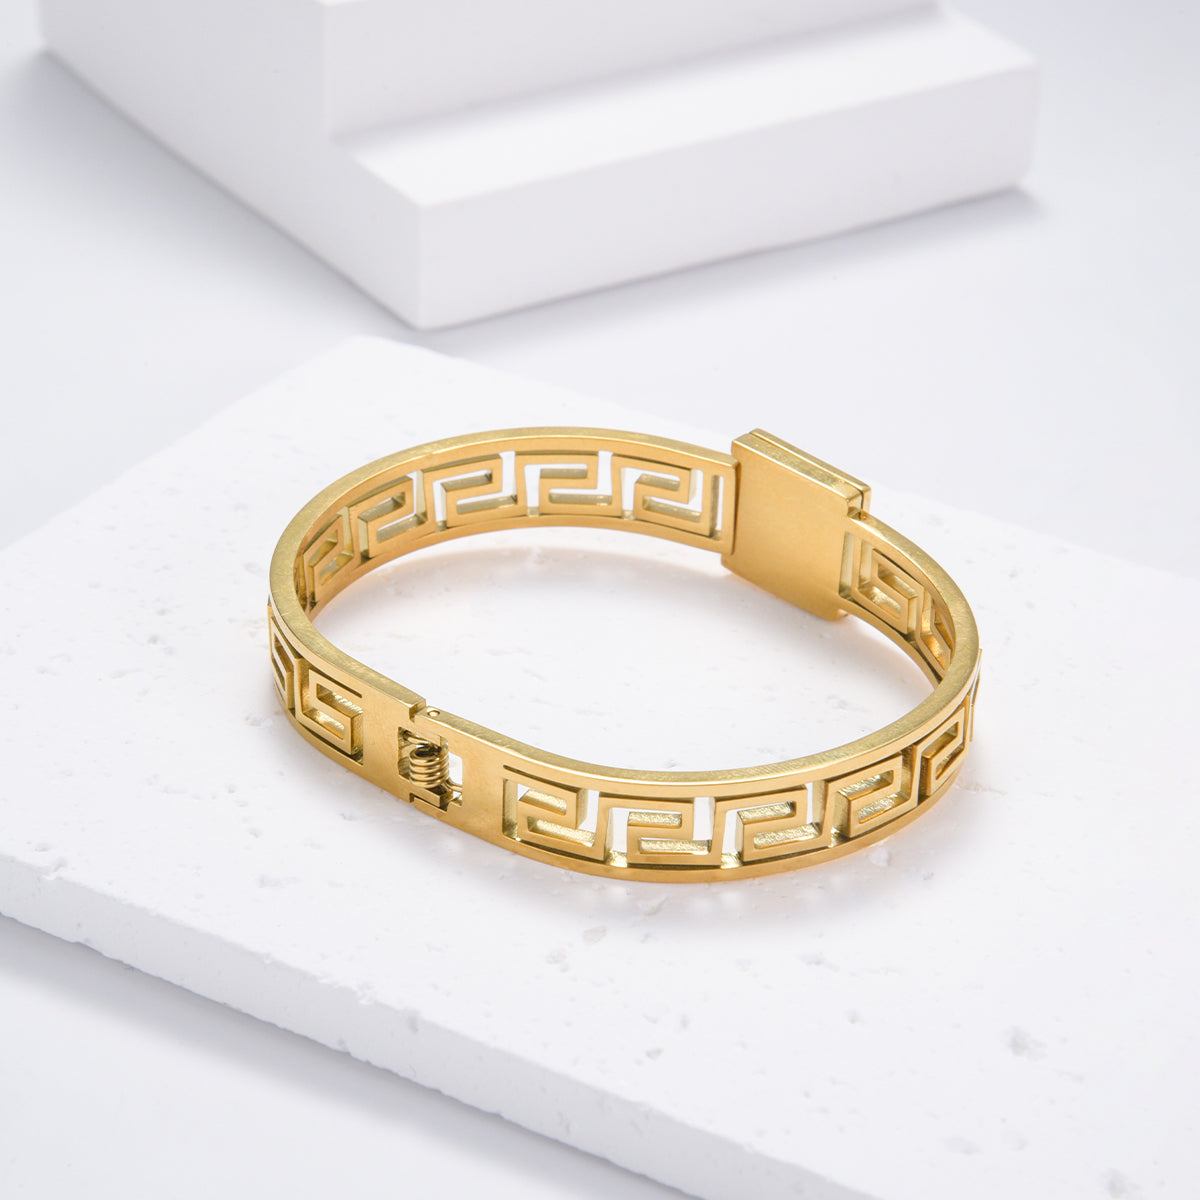 Engraved gold bracelet with black and gold motif